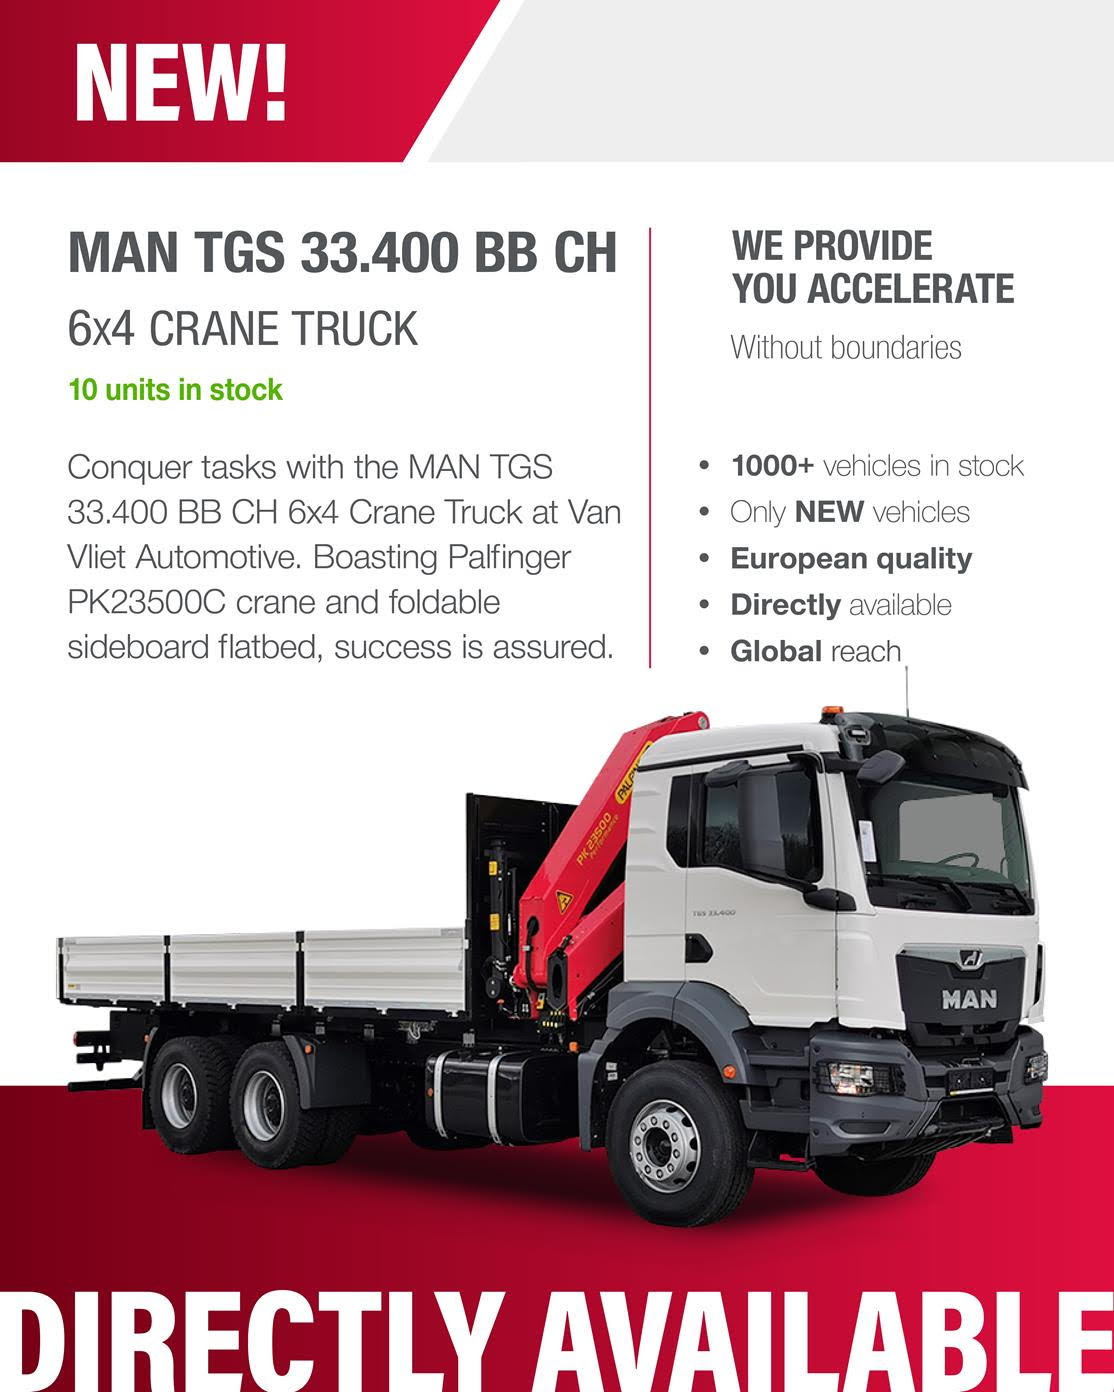 NEW IN STOCK: 10x MAN TGS 33.400 BB CH 6x4 Crane Truck! Holland 